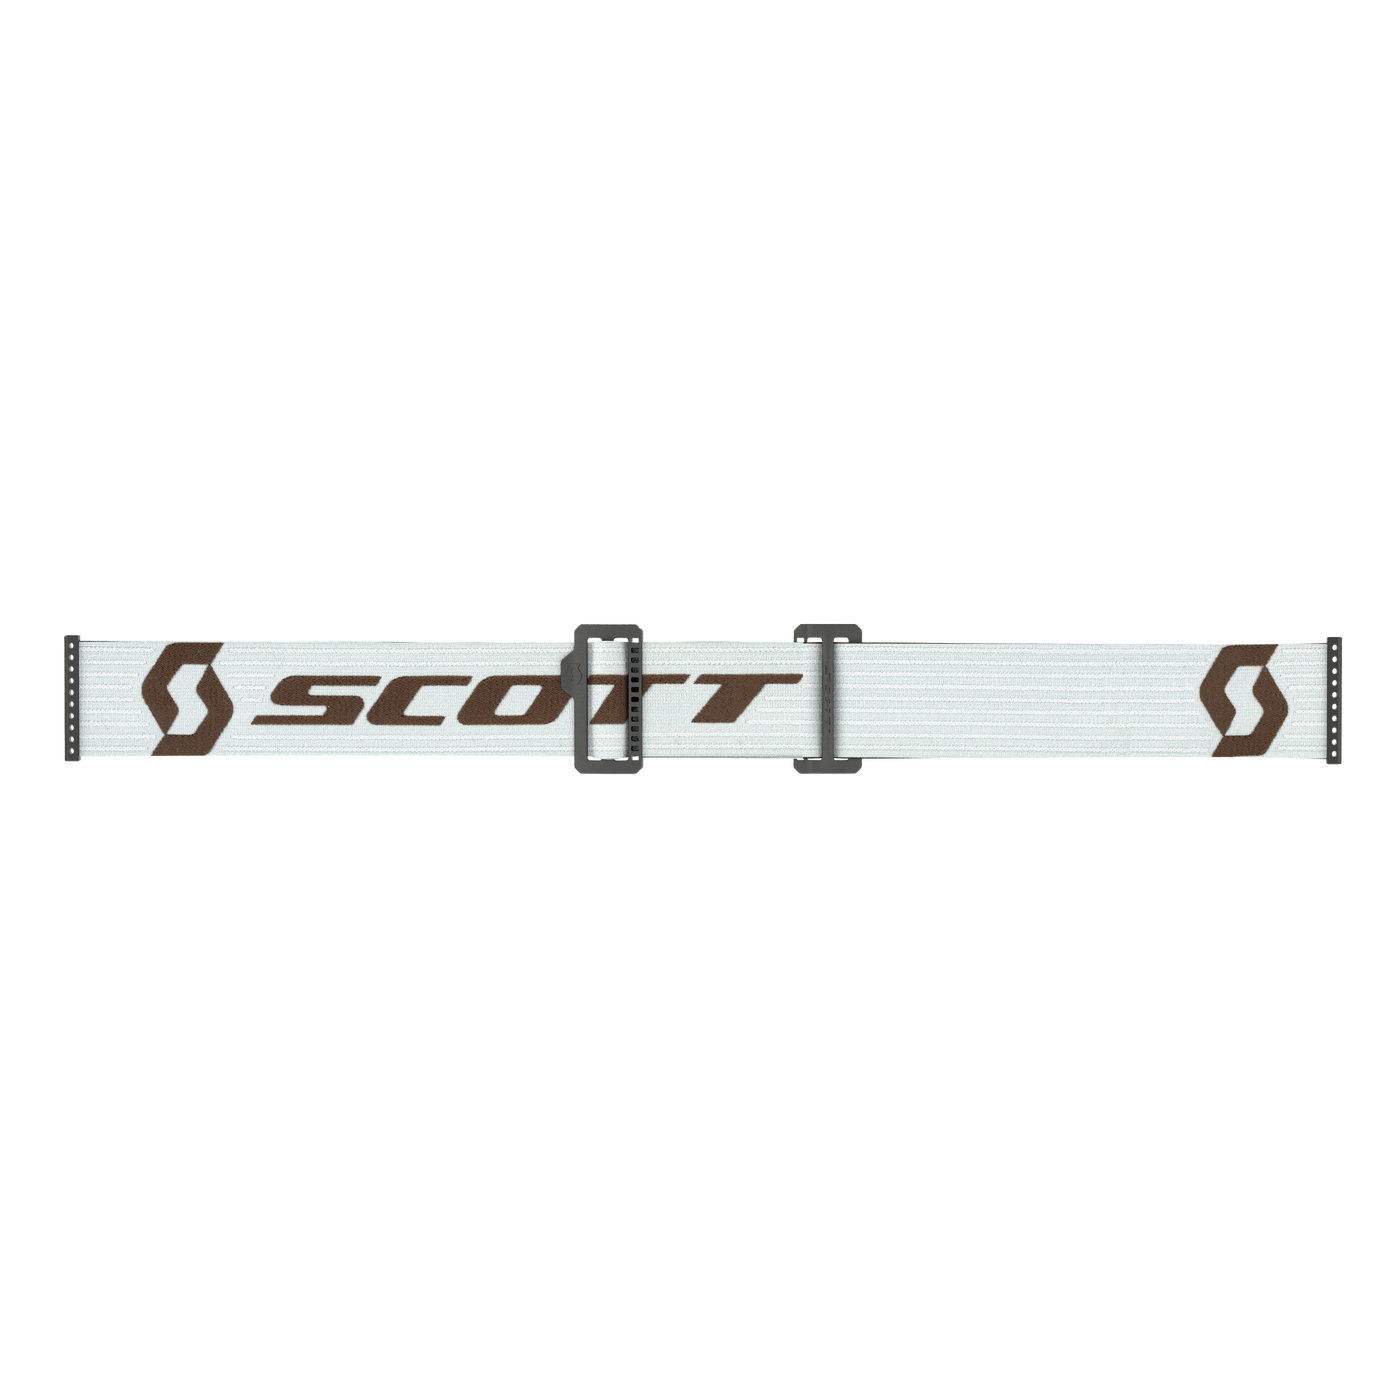 Scott Prospect Amplifier Goggle, Grey / Brown – Rose Chrome Works Lens